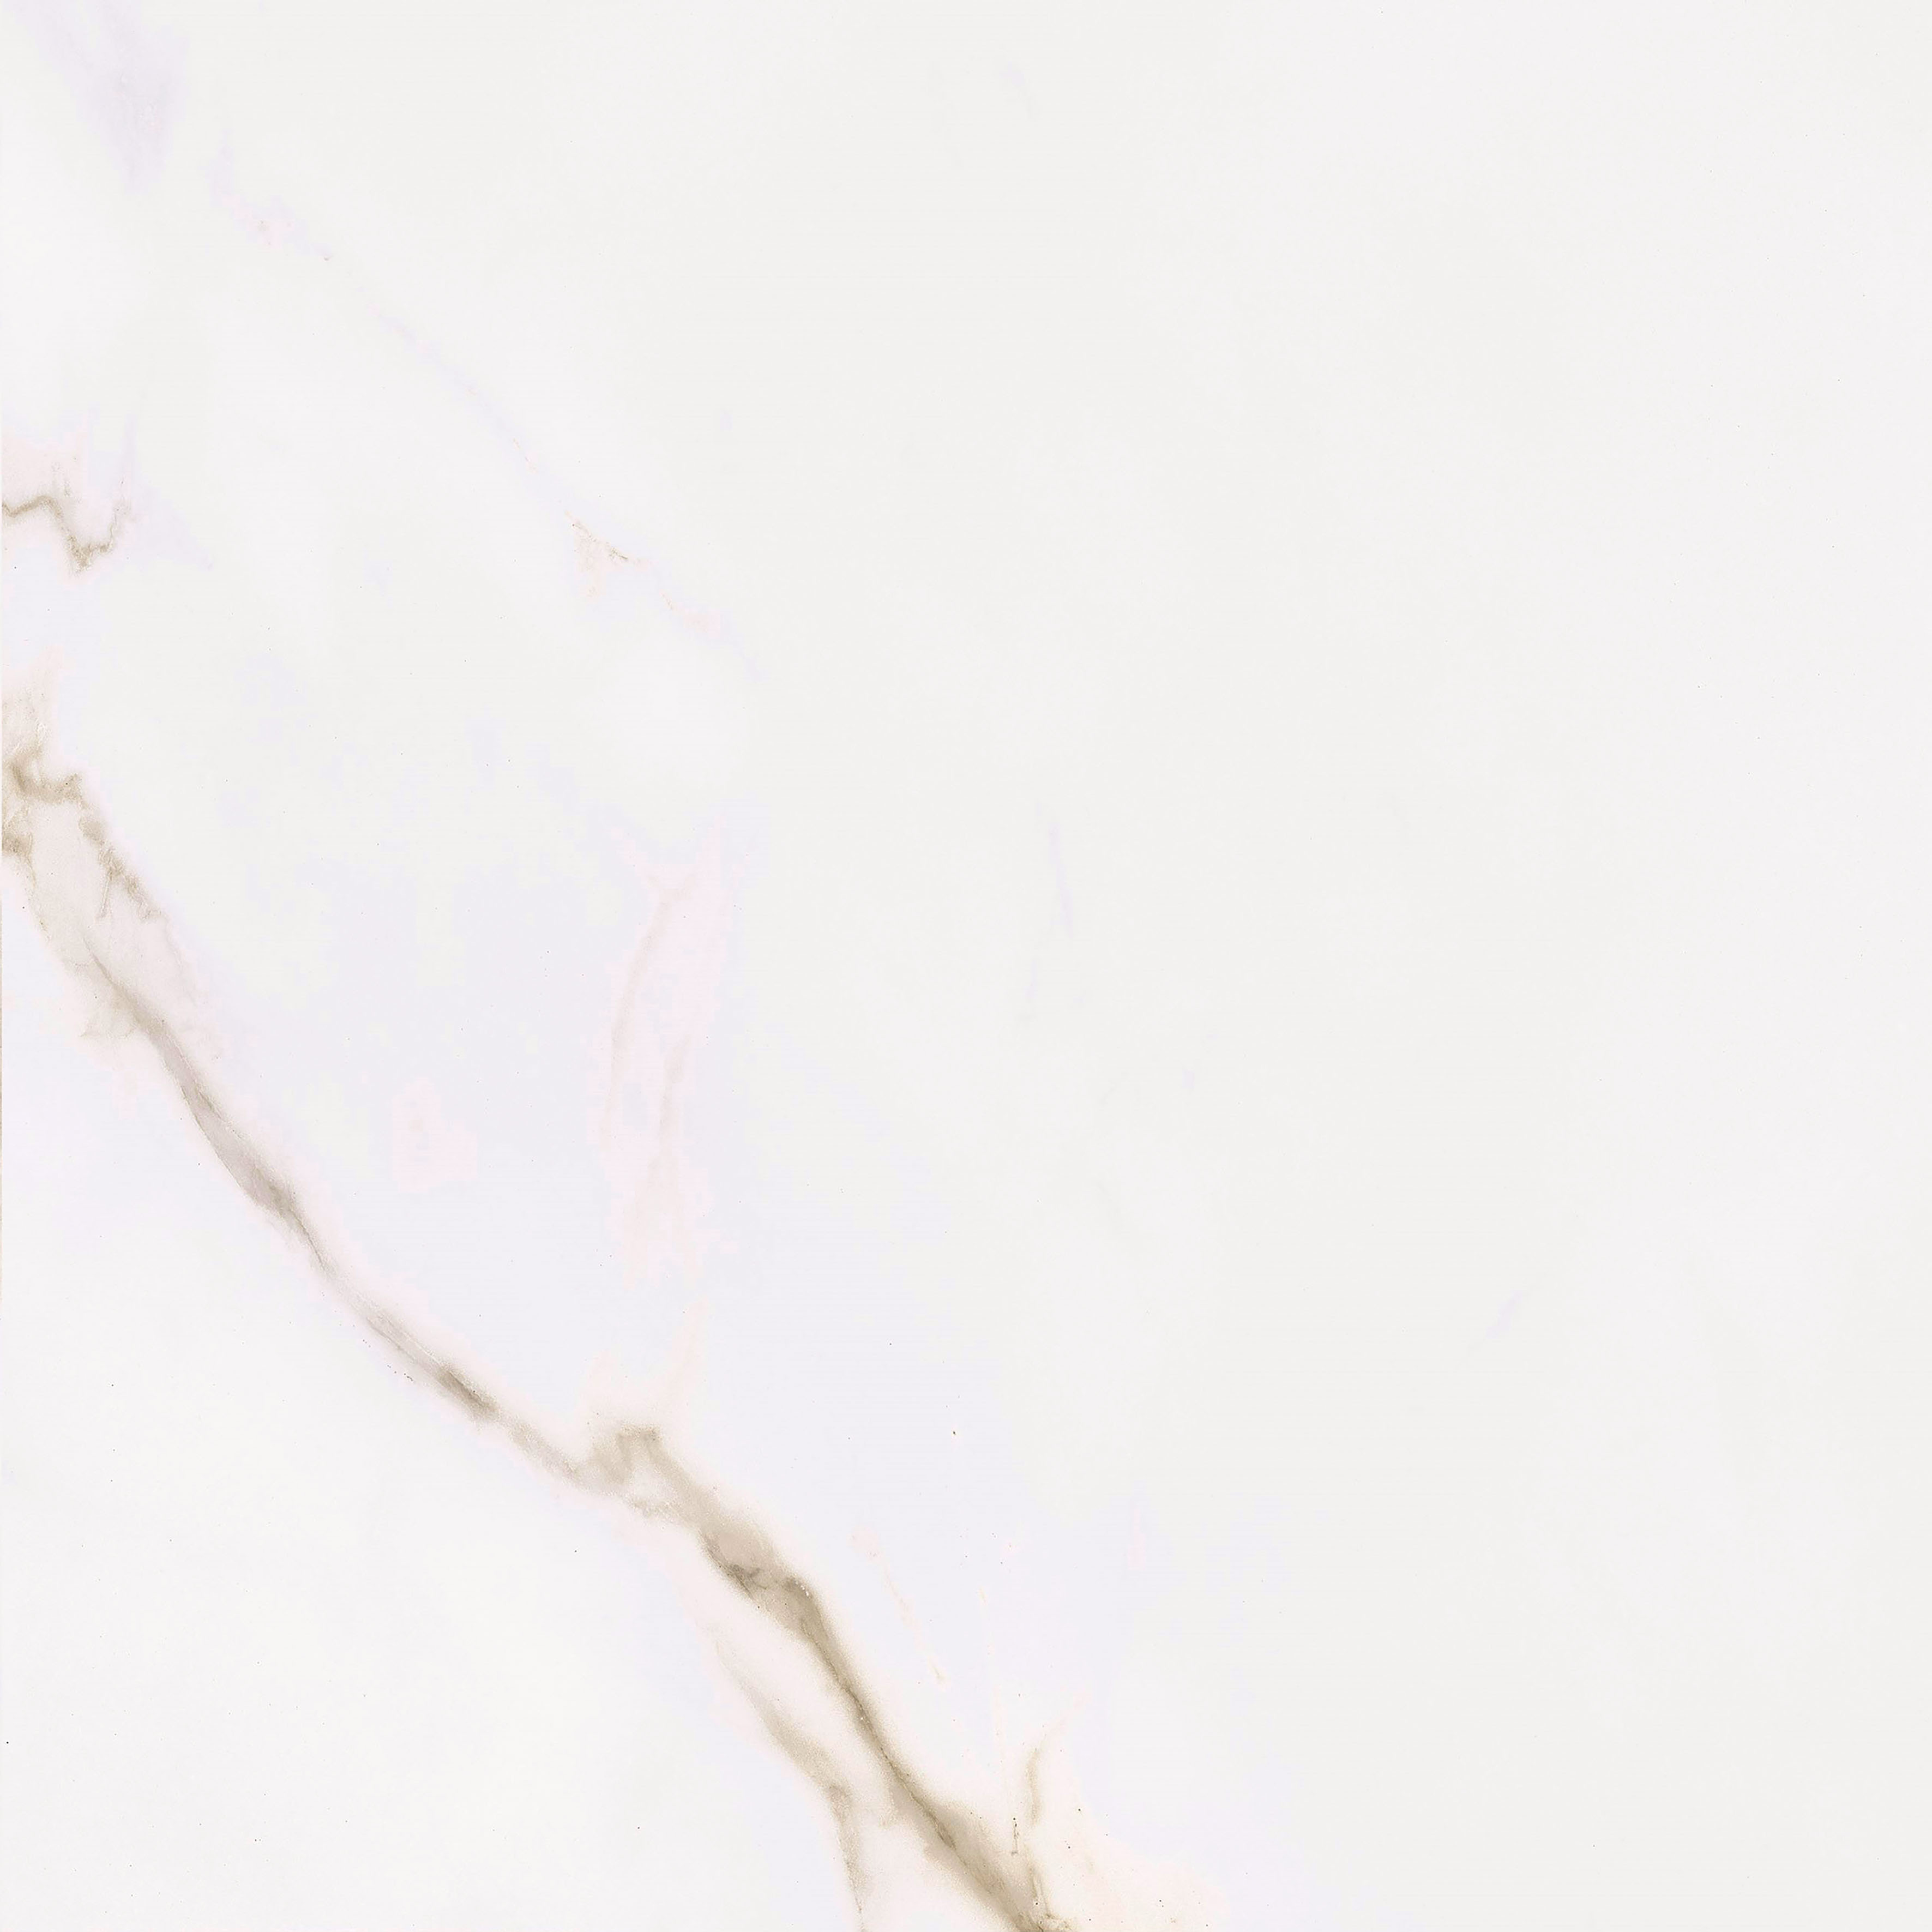 Vanezia Gres Kalmar Bodenfliesen Marmoroptik Weiß matt 60x60cm rekt. 